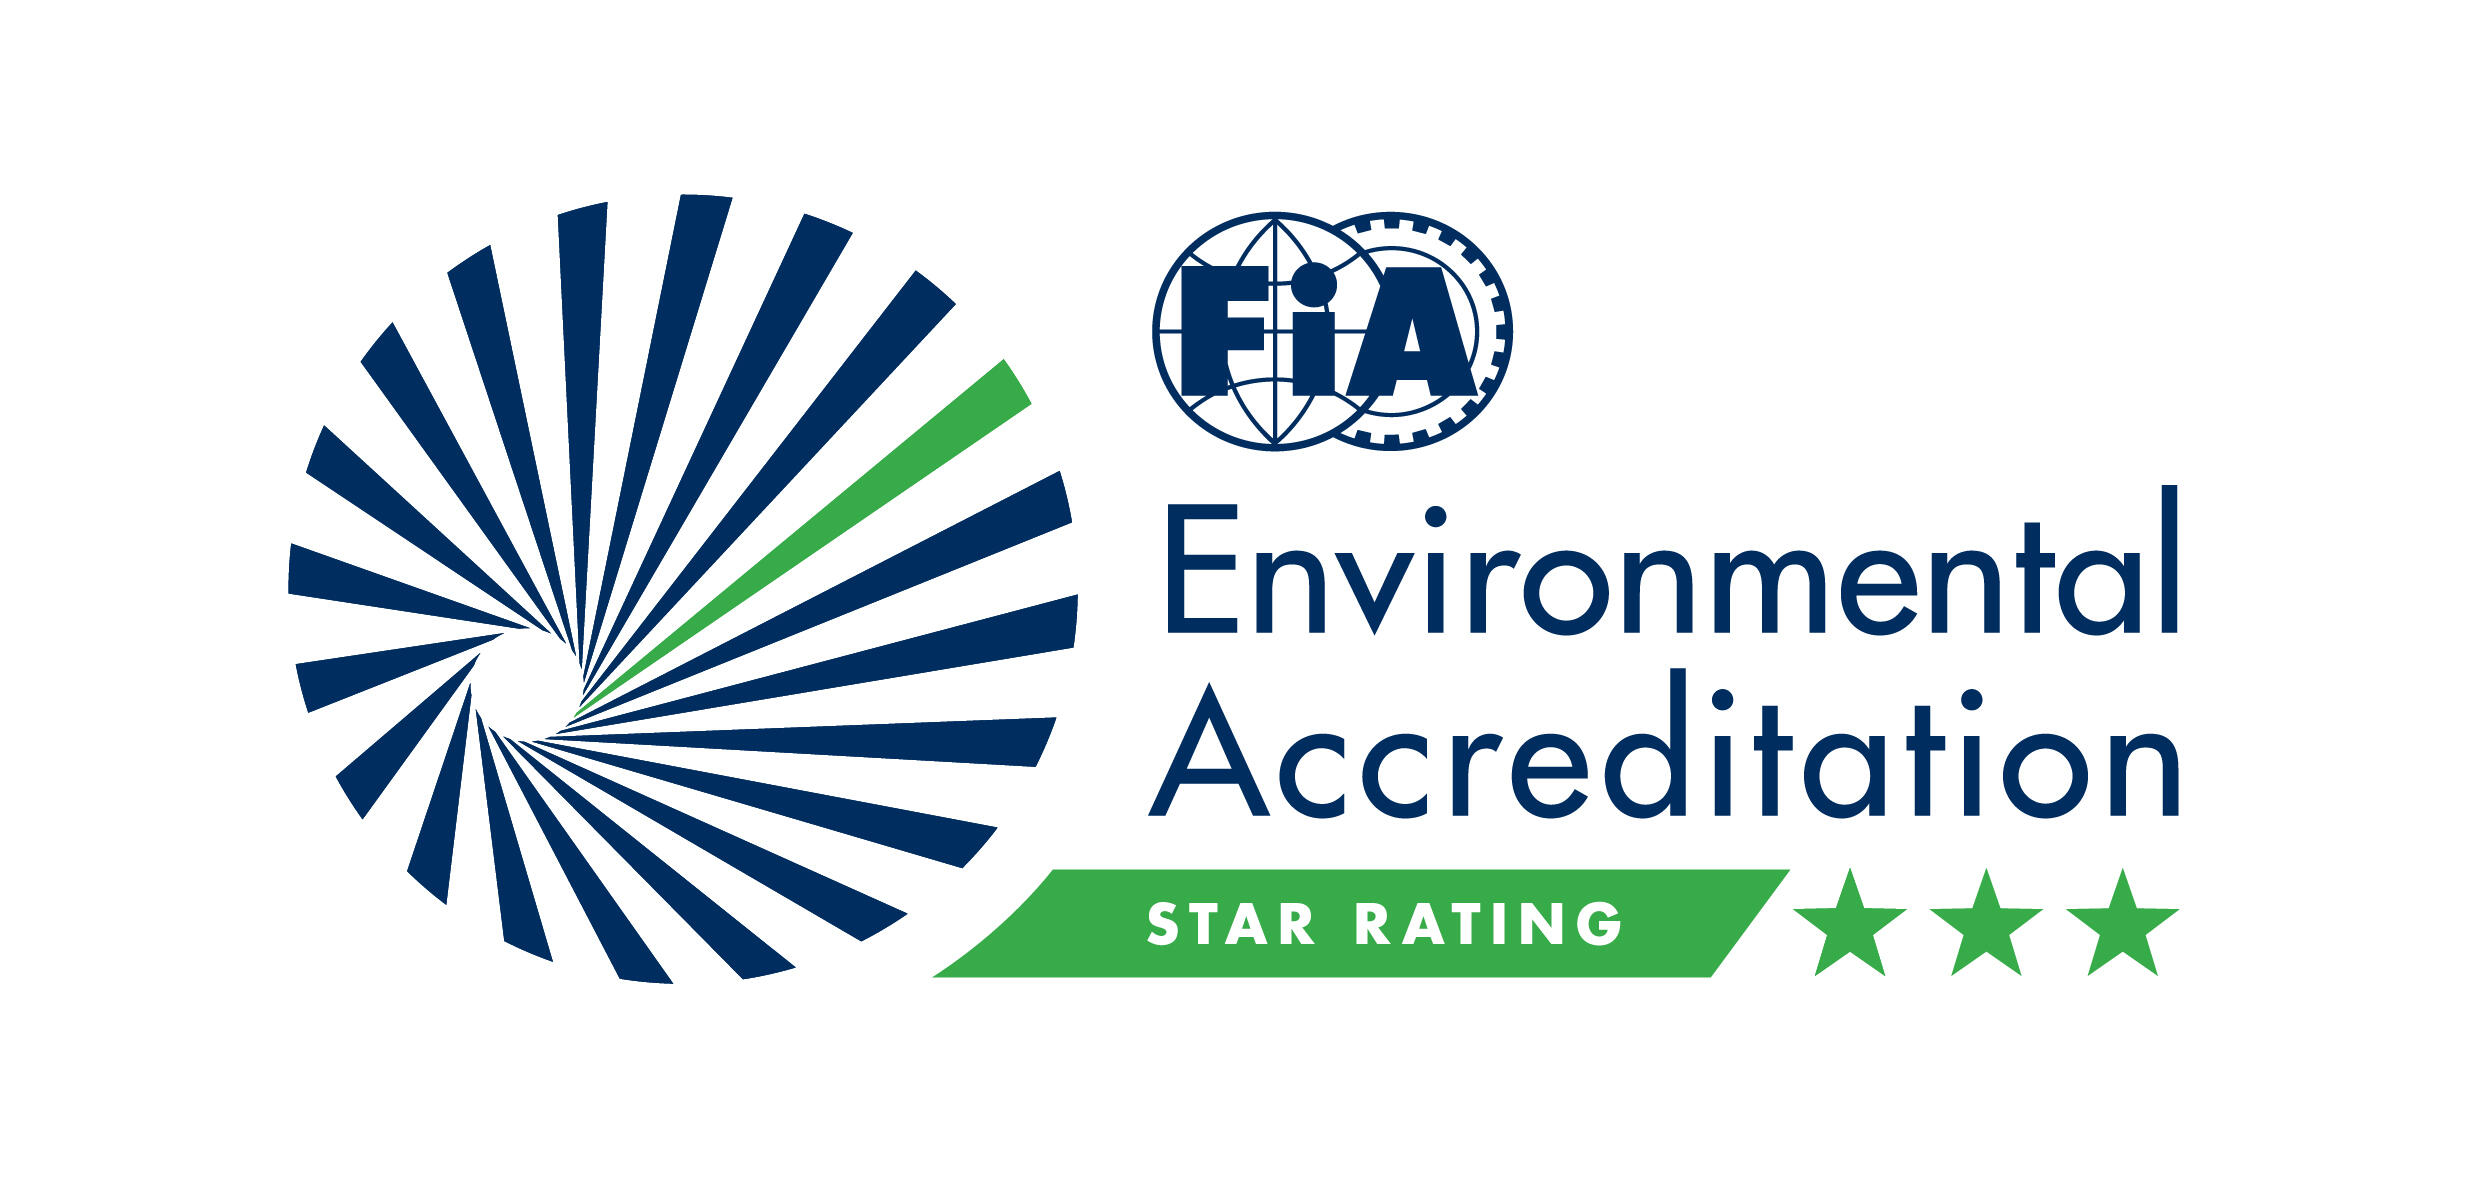 The FIA Environmental Accreditation